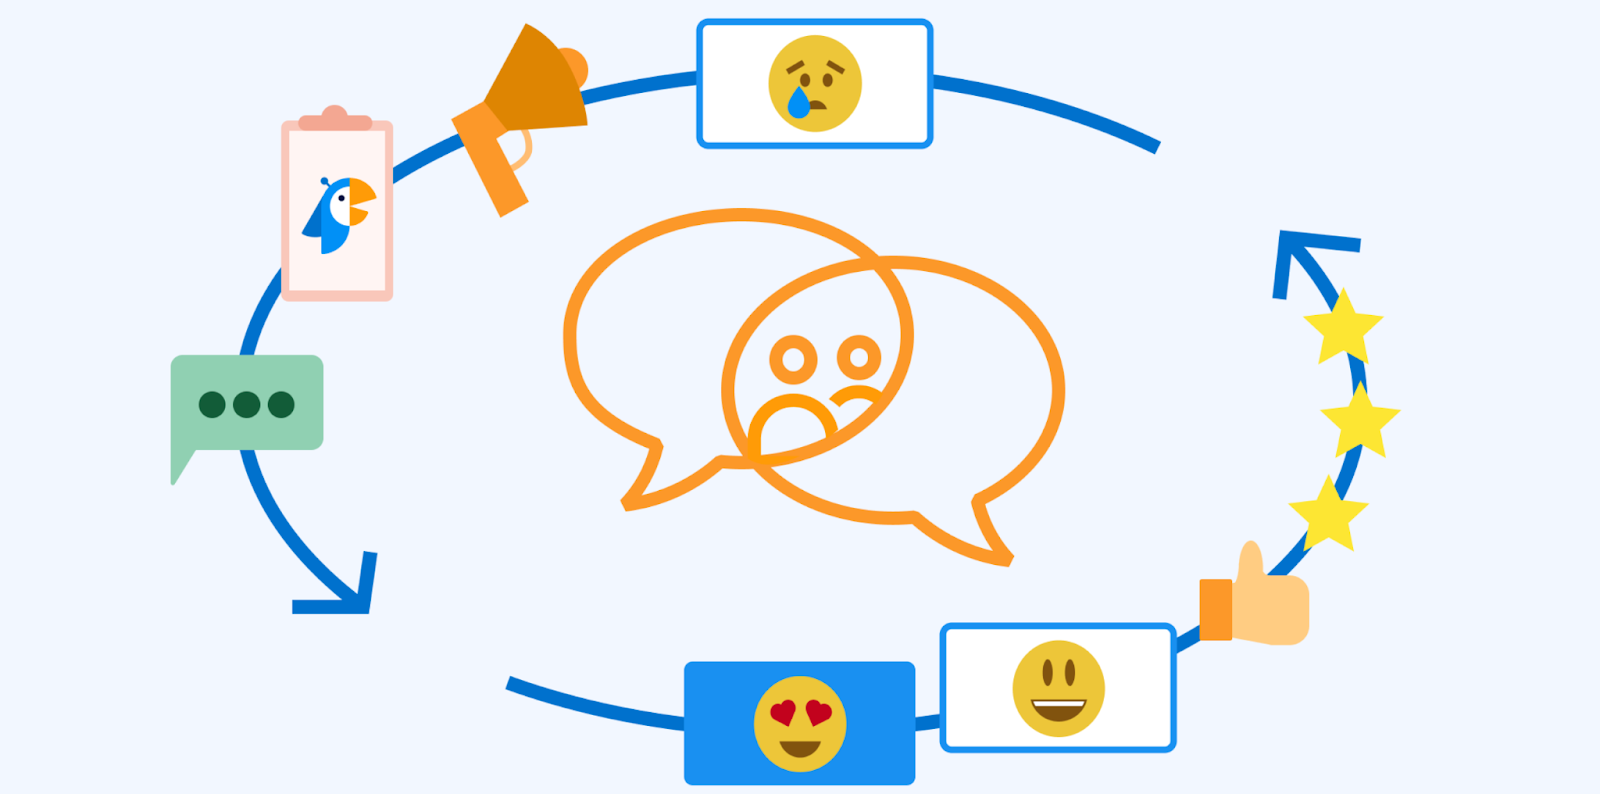 Slack poll: illustration of changing emotions using emojis